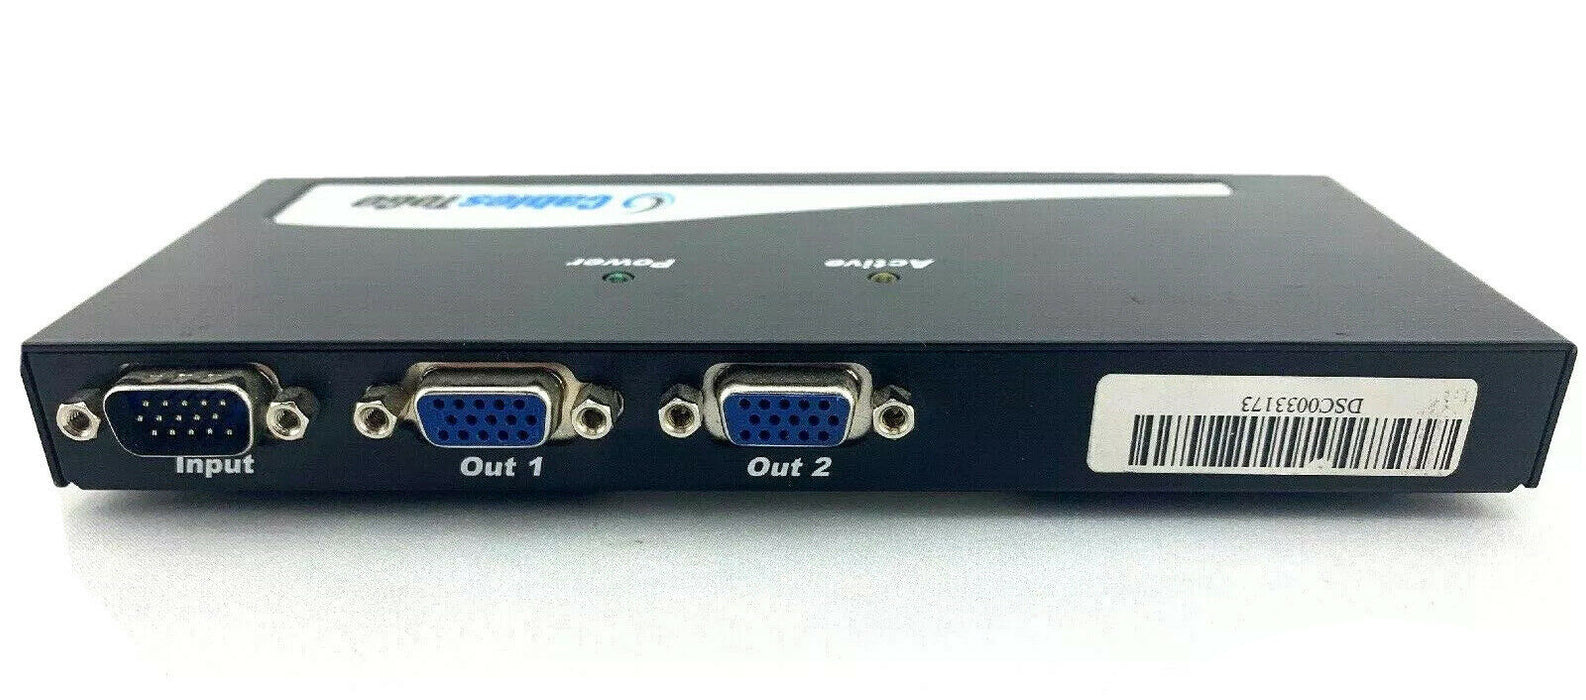 Cables To Go 29550 2-Port UXGA Monitor Video Splitter Extender Fast Shipping VGA